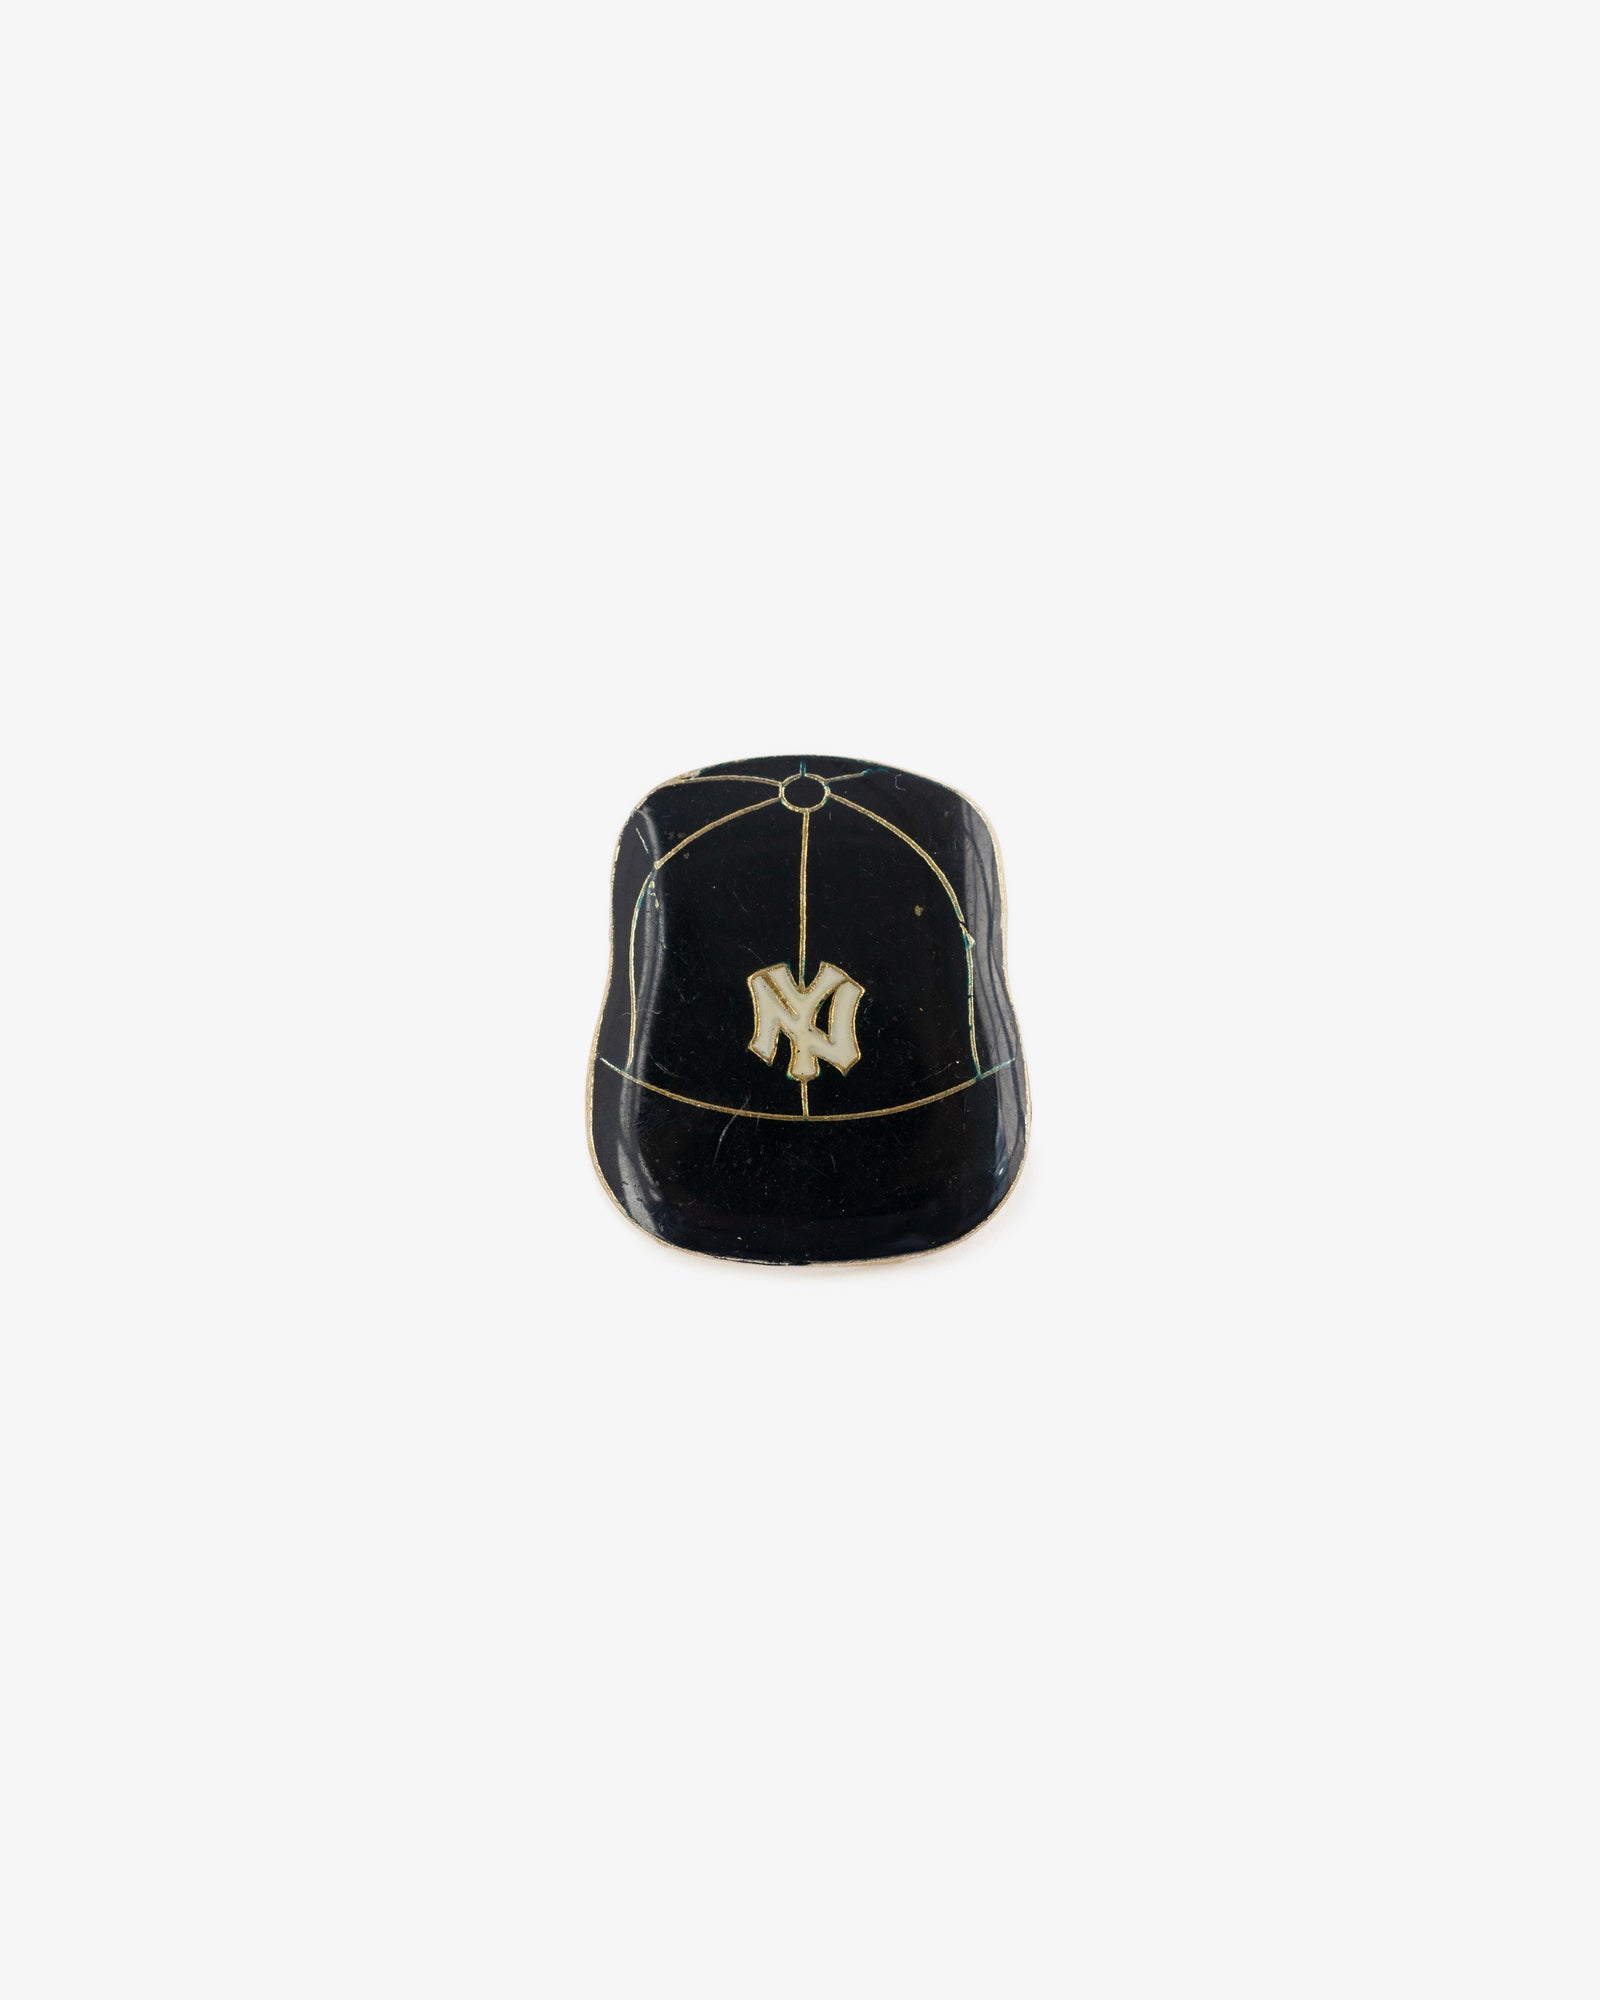 Vintage New York Yankees Hat Pin